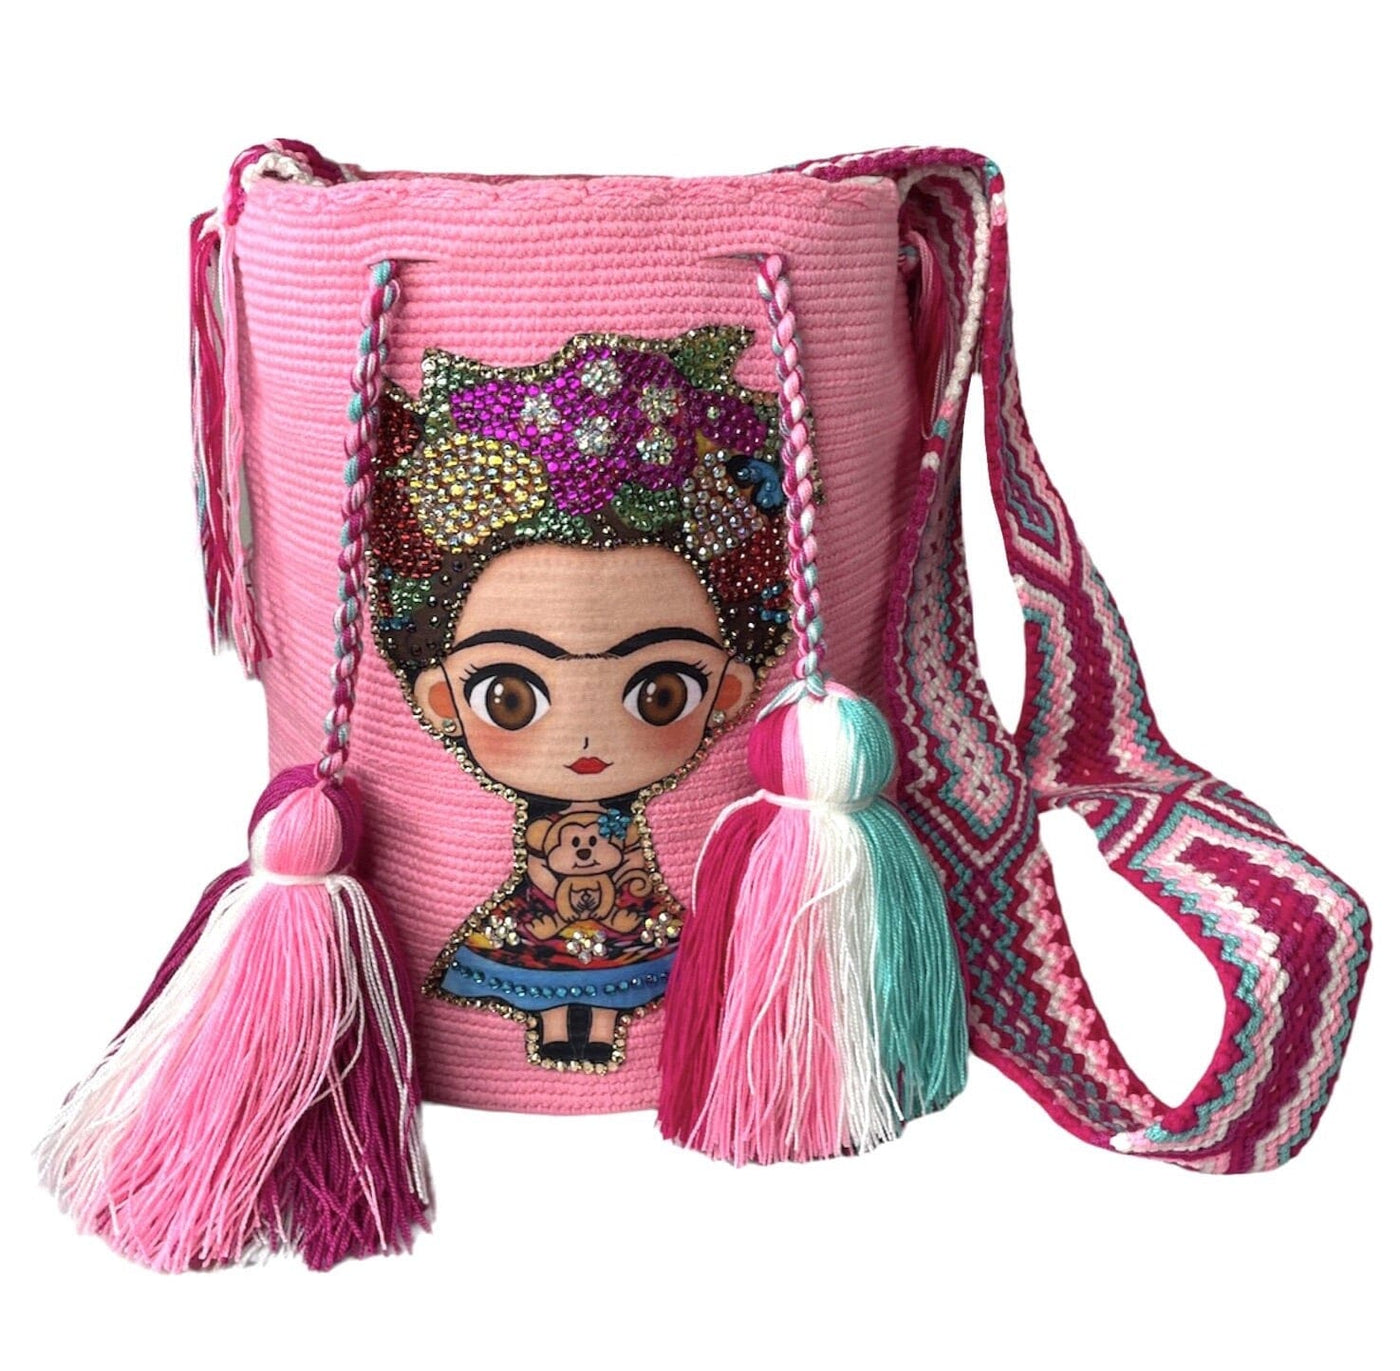 New Arrivals Crystal Embellished Crochet Bags Crossbody Crochet Boho Bag - Traditional Wayuu Design #37 Large Pink Frida Crochet Bag (11"H x 9.5"W) 